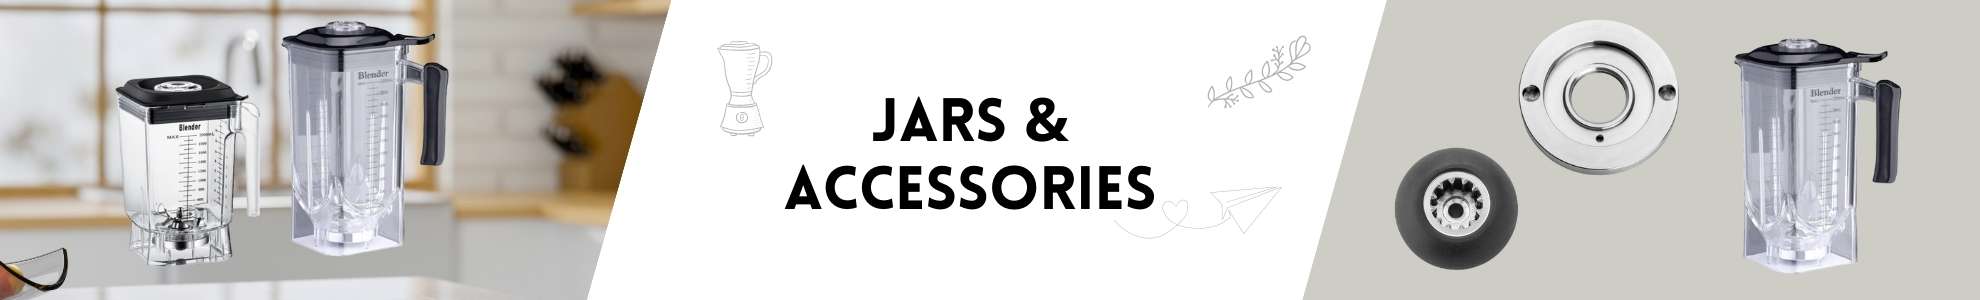 JARS & ACCESSORIES